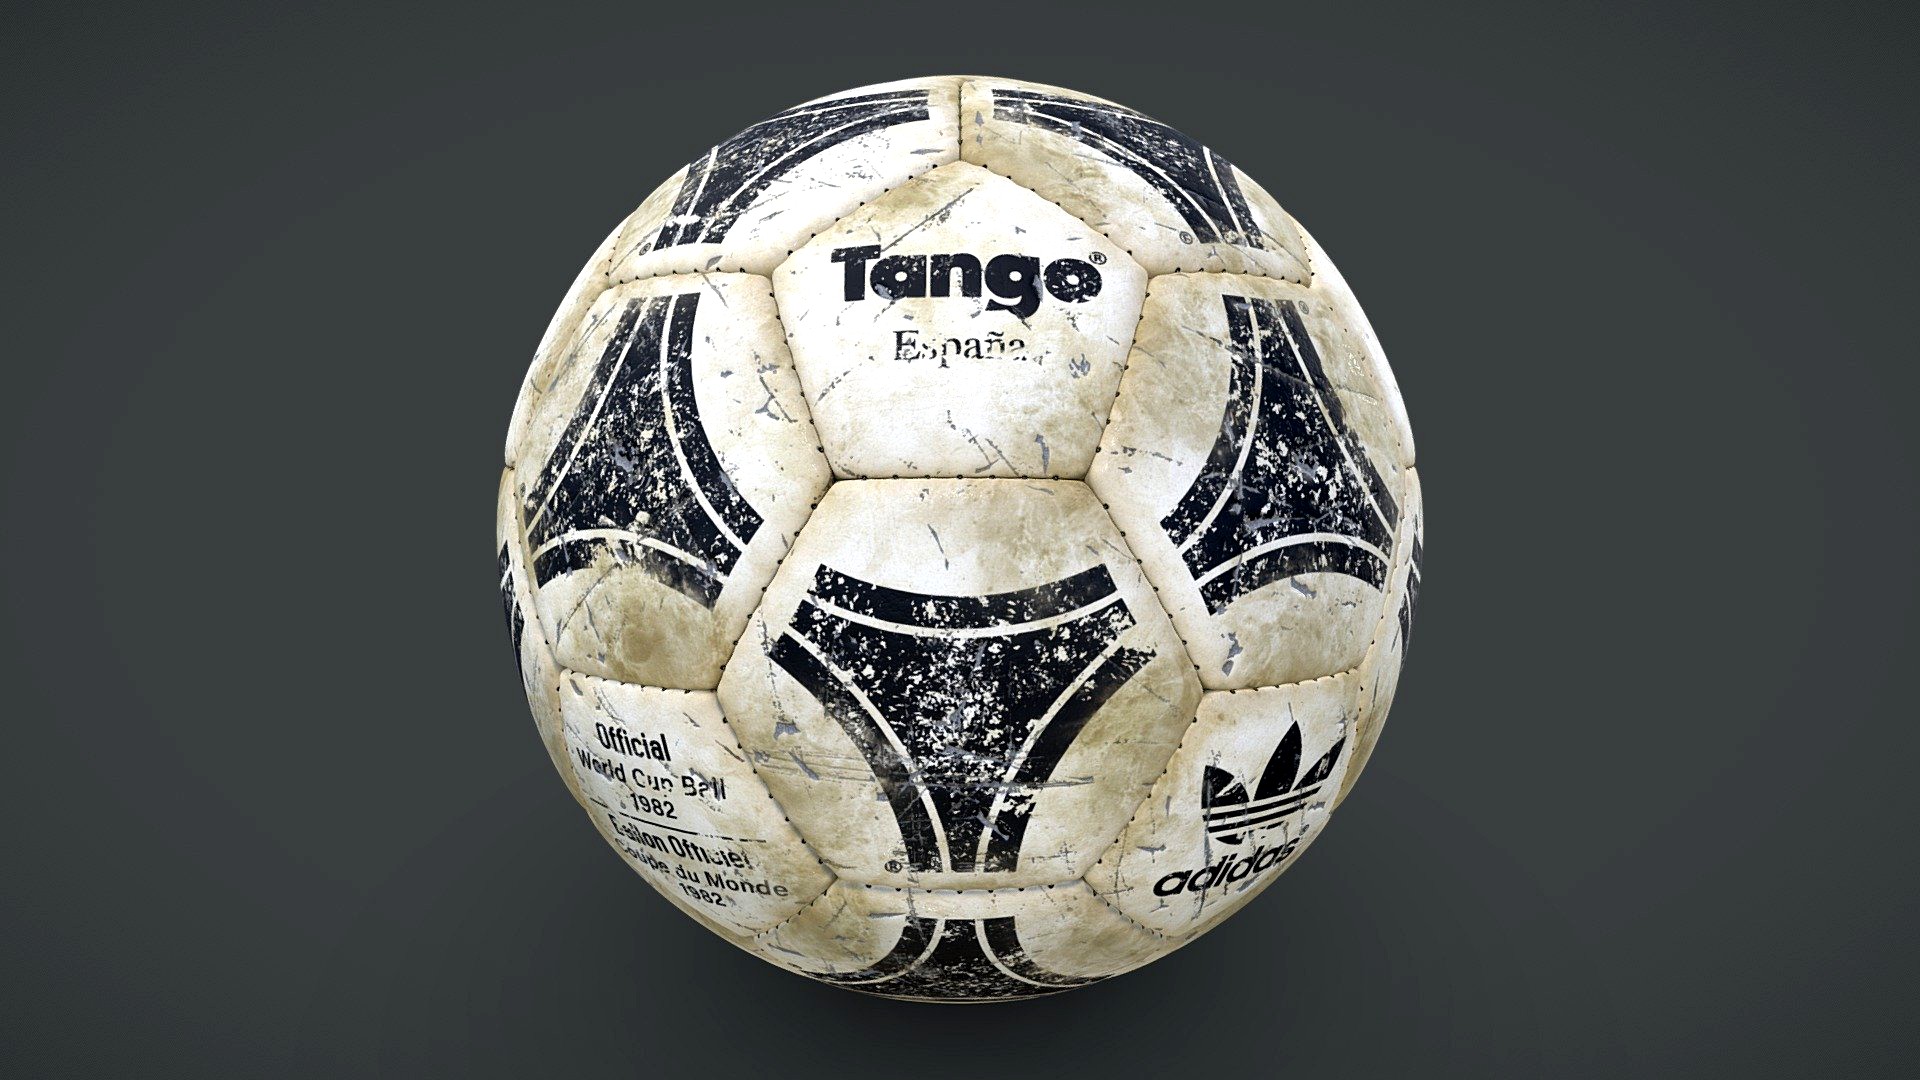 Adidas Tango Espana White Worn Soccer Ball